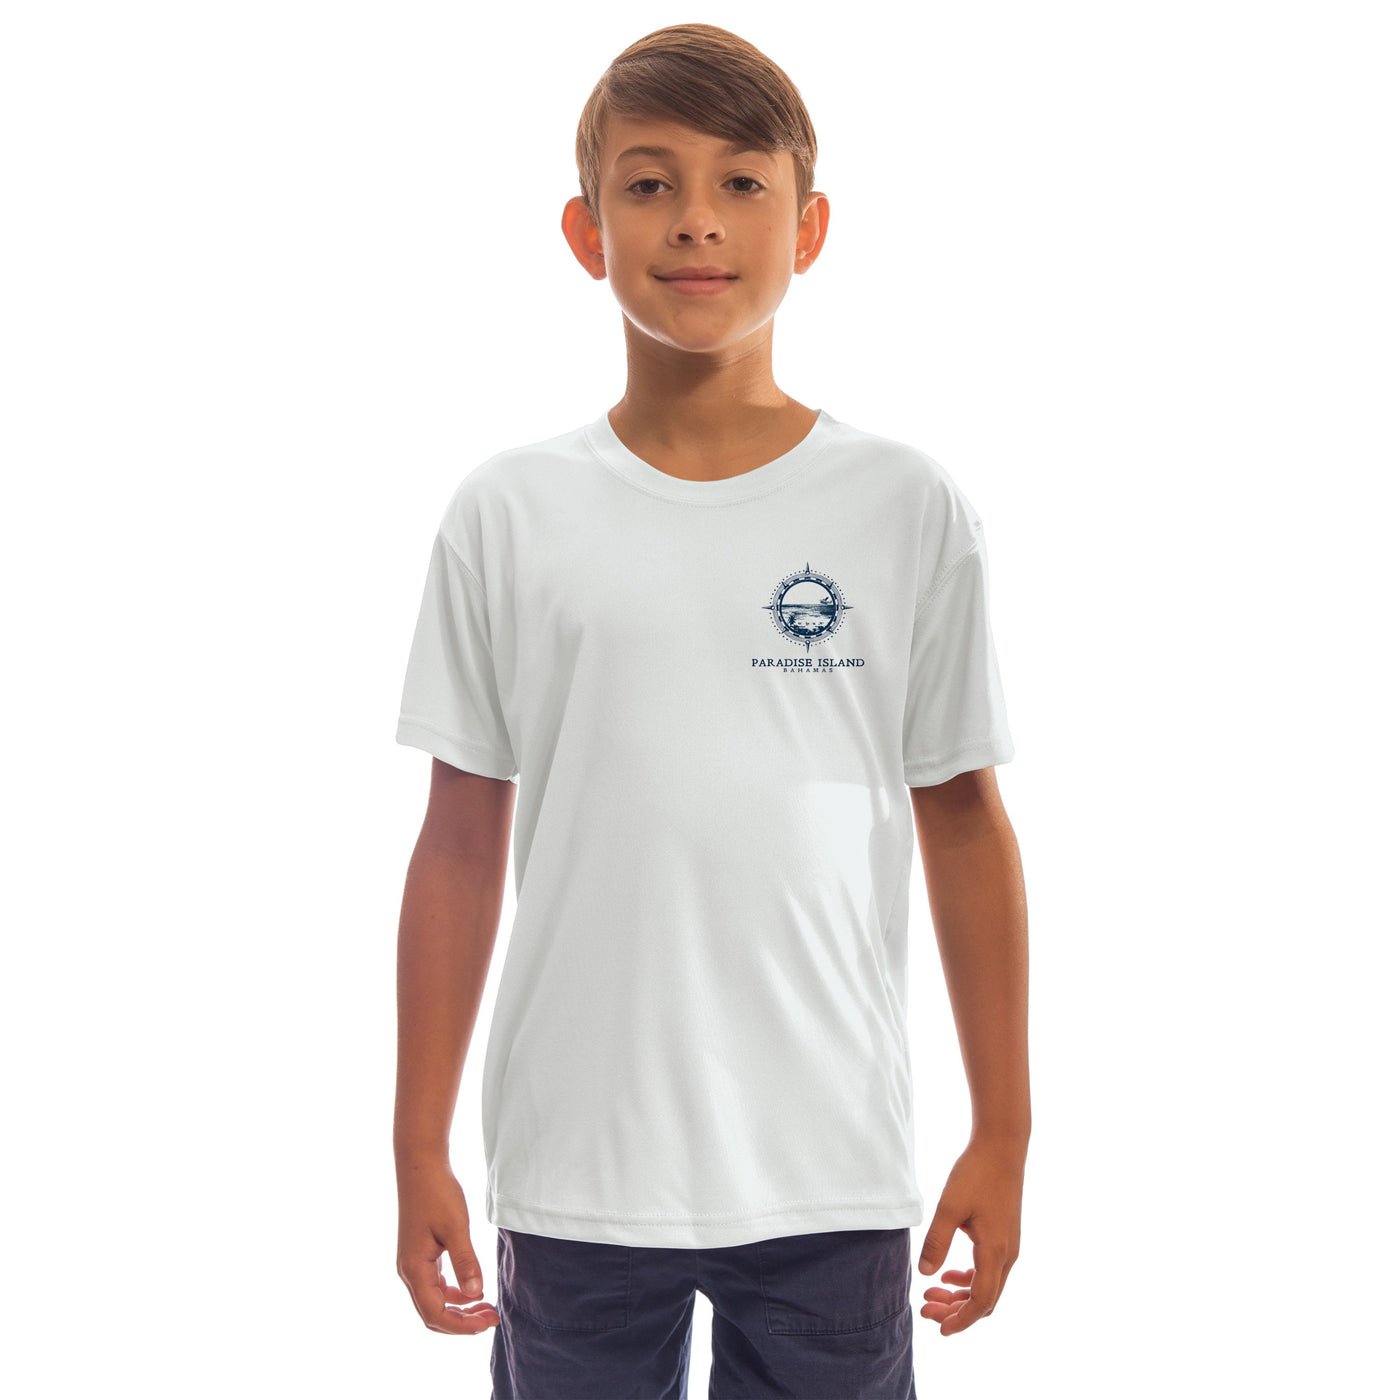 Compass Vintage Paradise Island Youth UPF 50+ UV/Sun Protection Long Sleeve T-Shirt